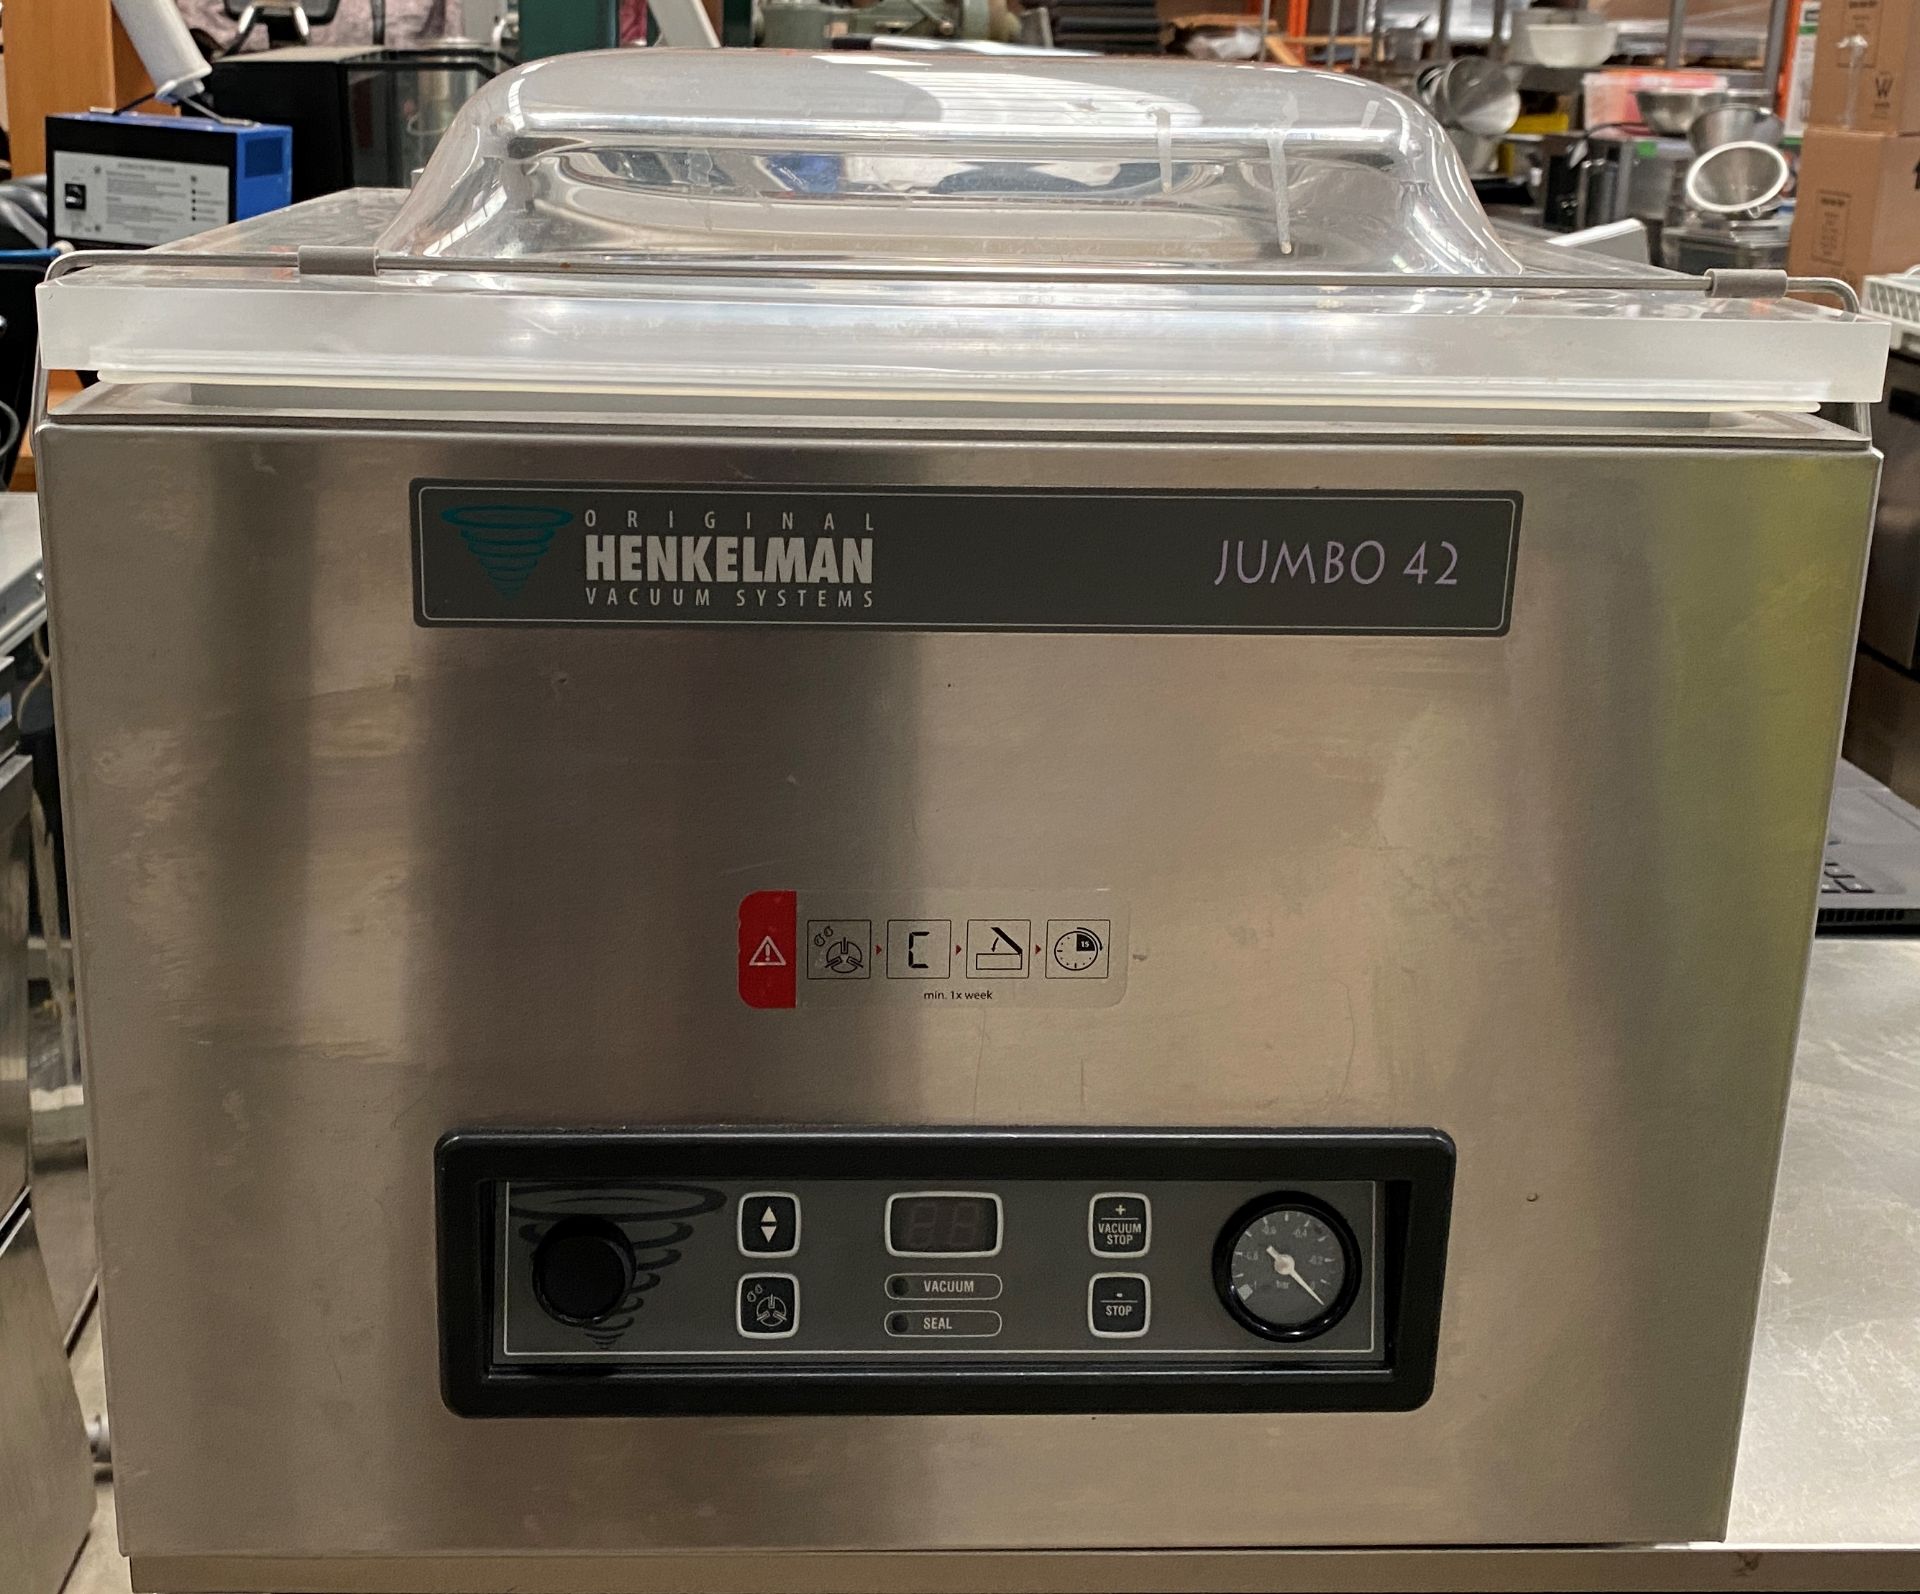 Henkelman Vacuum Systems Jumbo 42 Stainless Steel Vacuum Packing Machine (YOM 2019) and 2 Boxes of